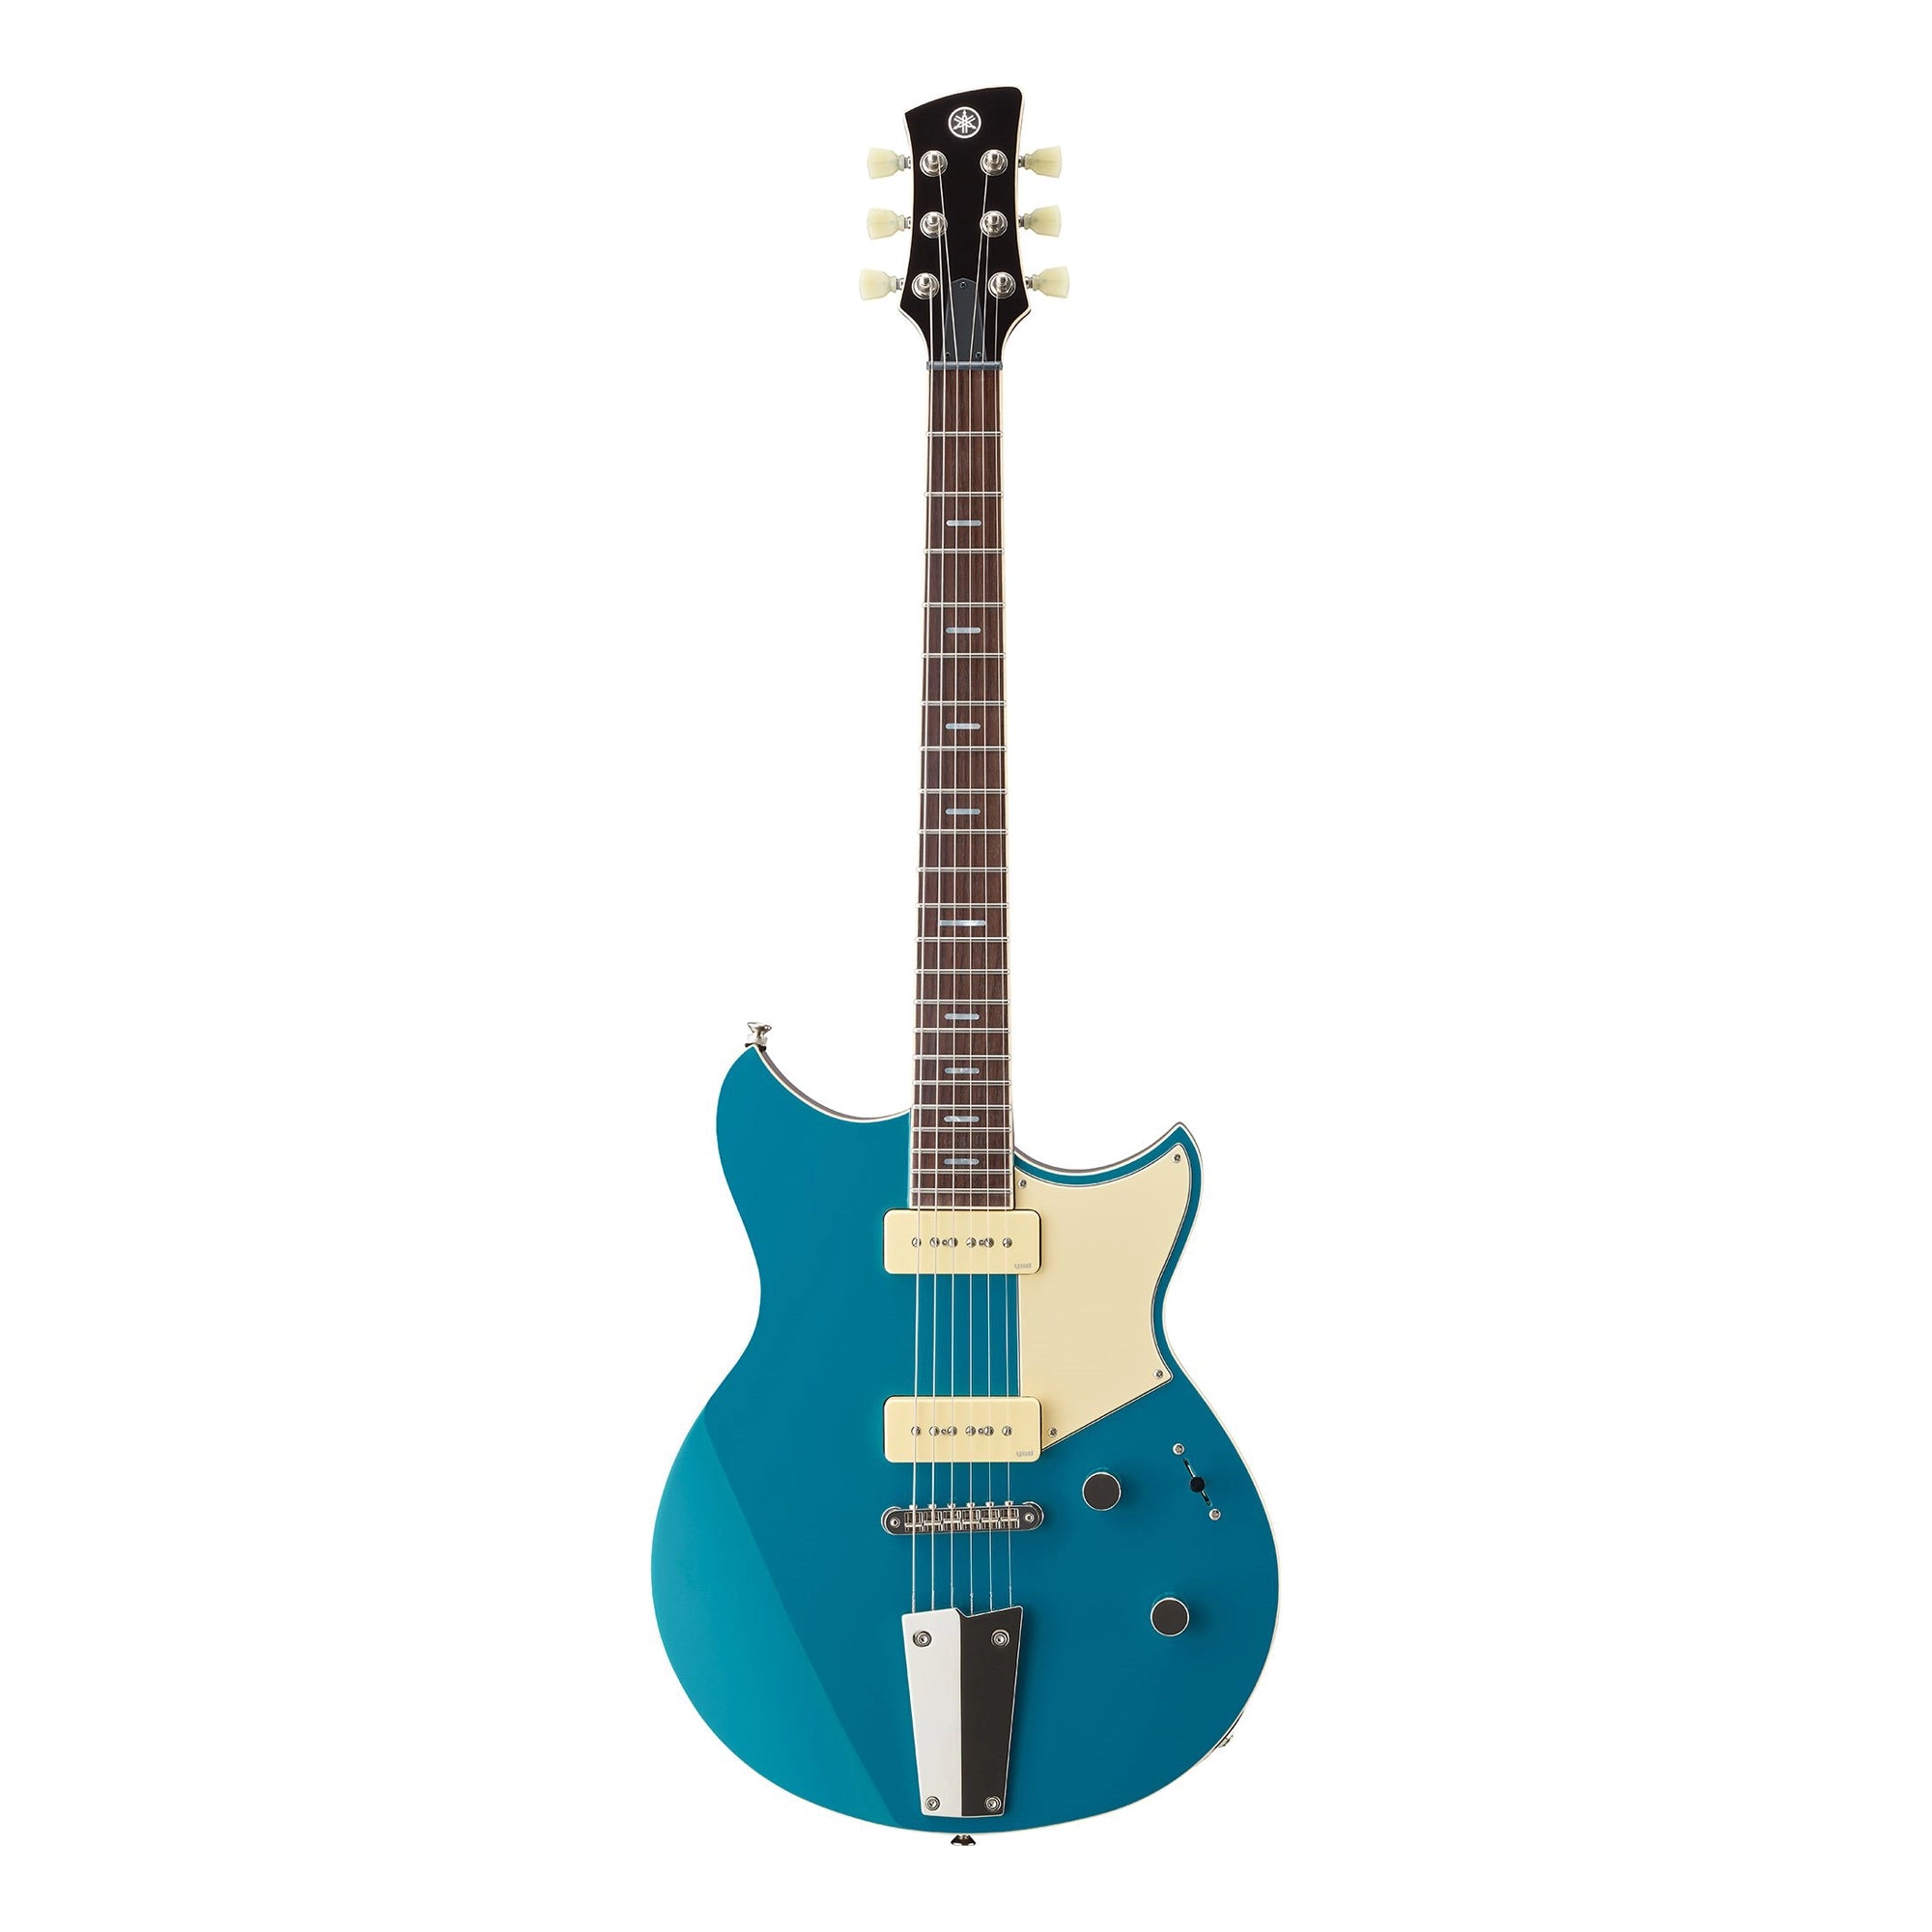 Yamaha Revstar Professional RSP02T Electric Guitar - Swift Blue